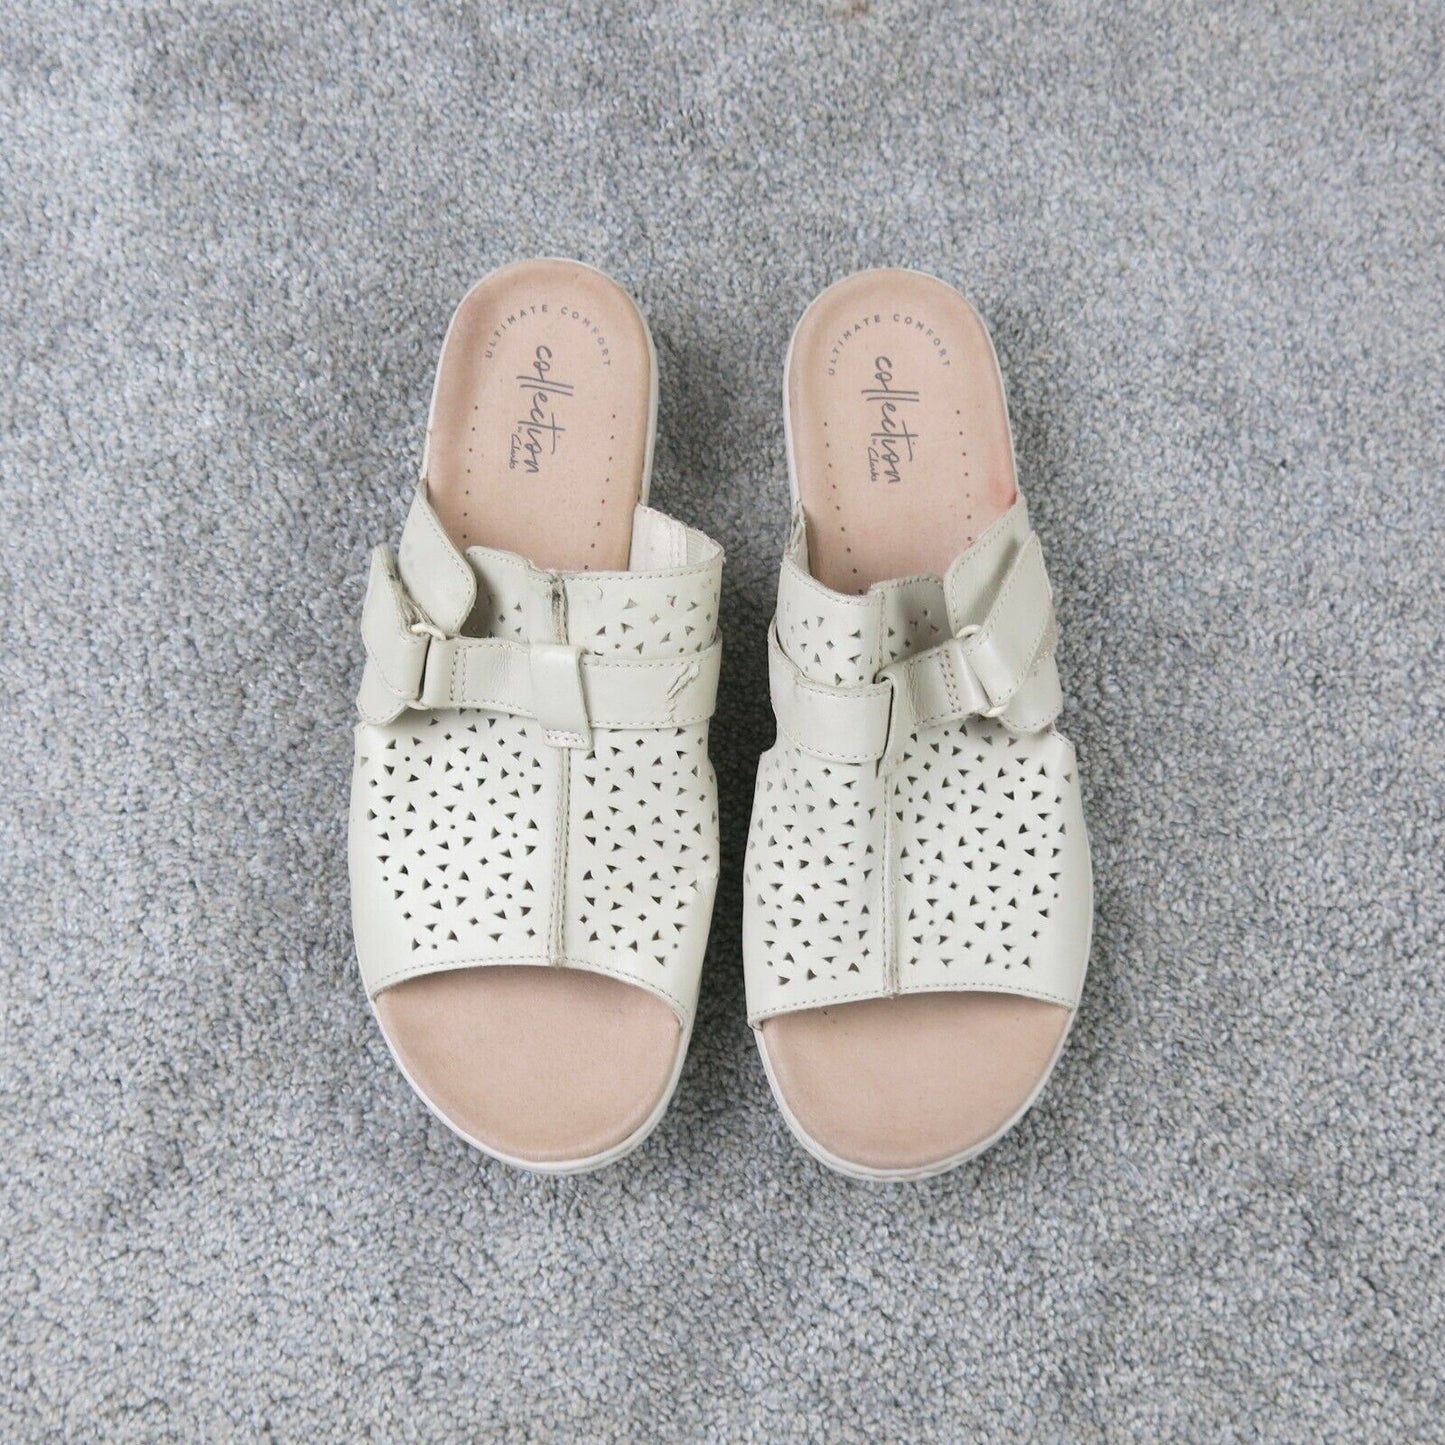 Clarks Women's Collection 61116818 Ivory Slip On Slide Sandals Size US 9.5